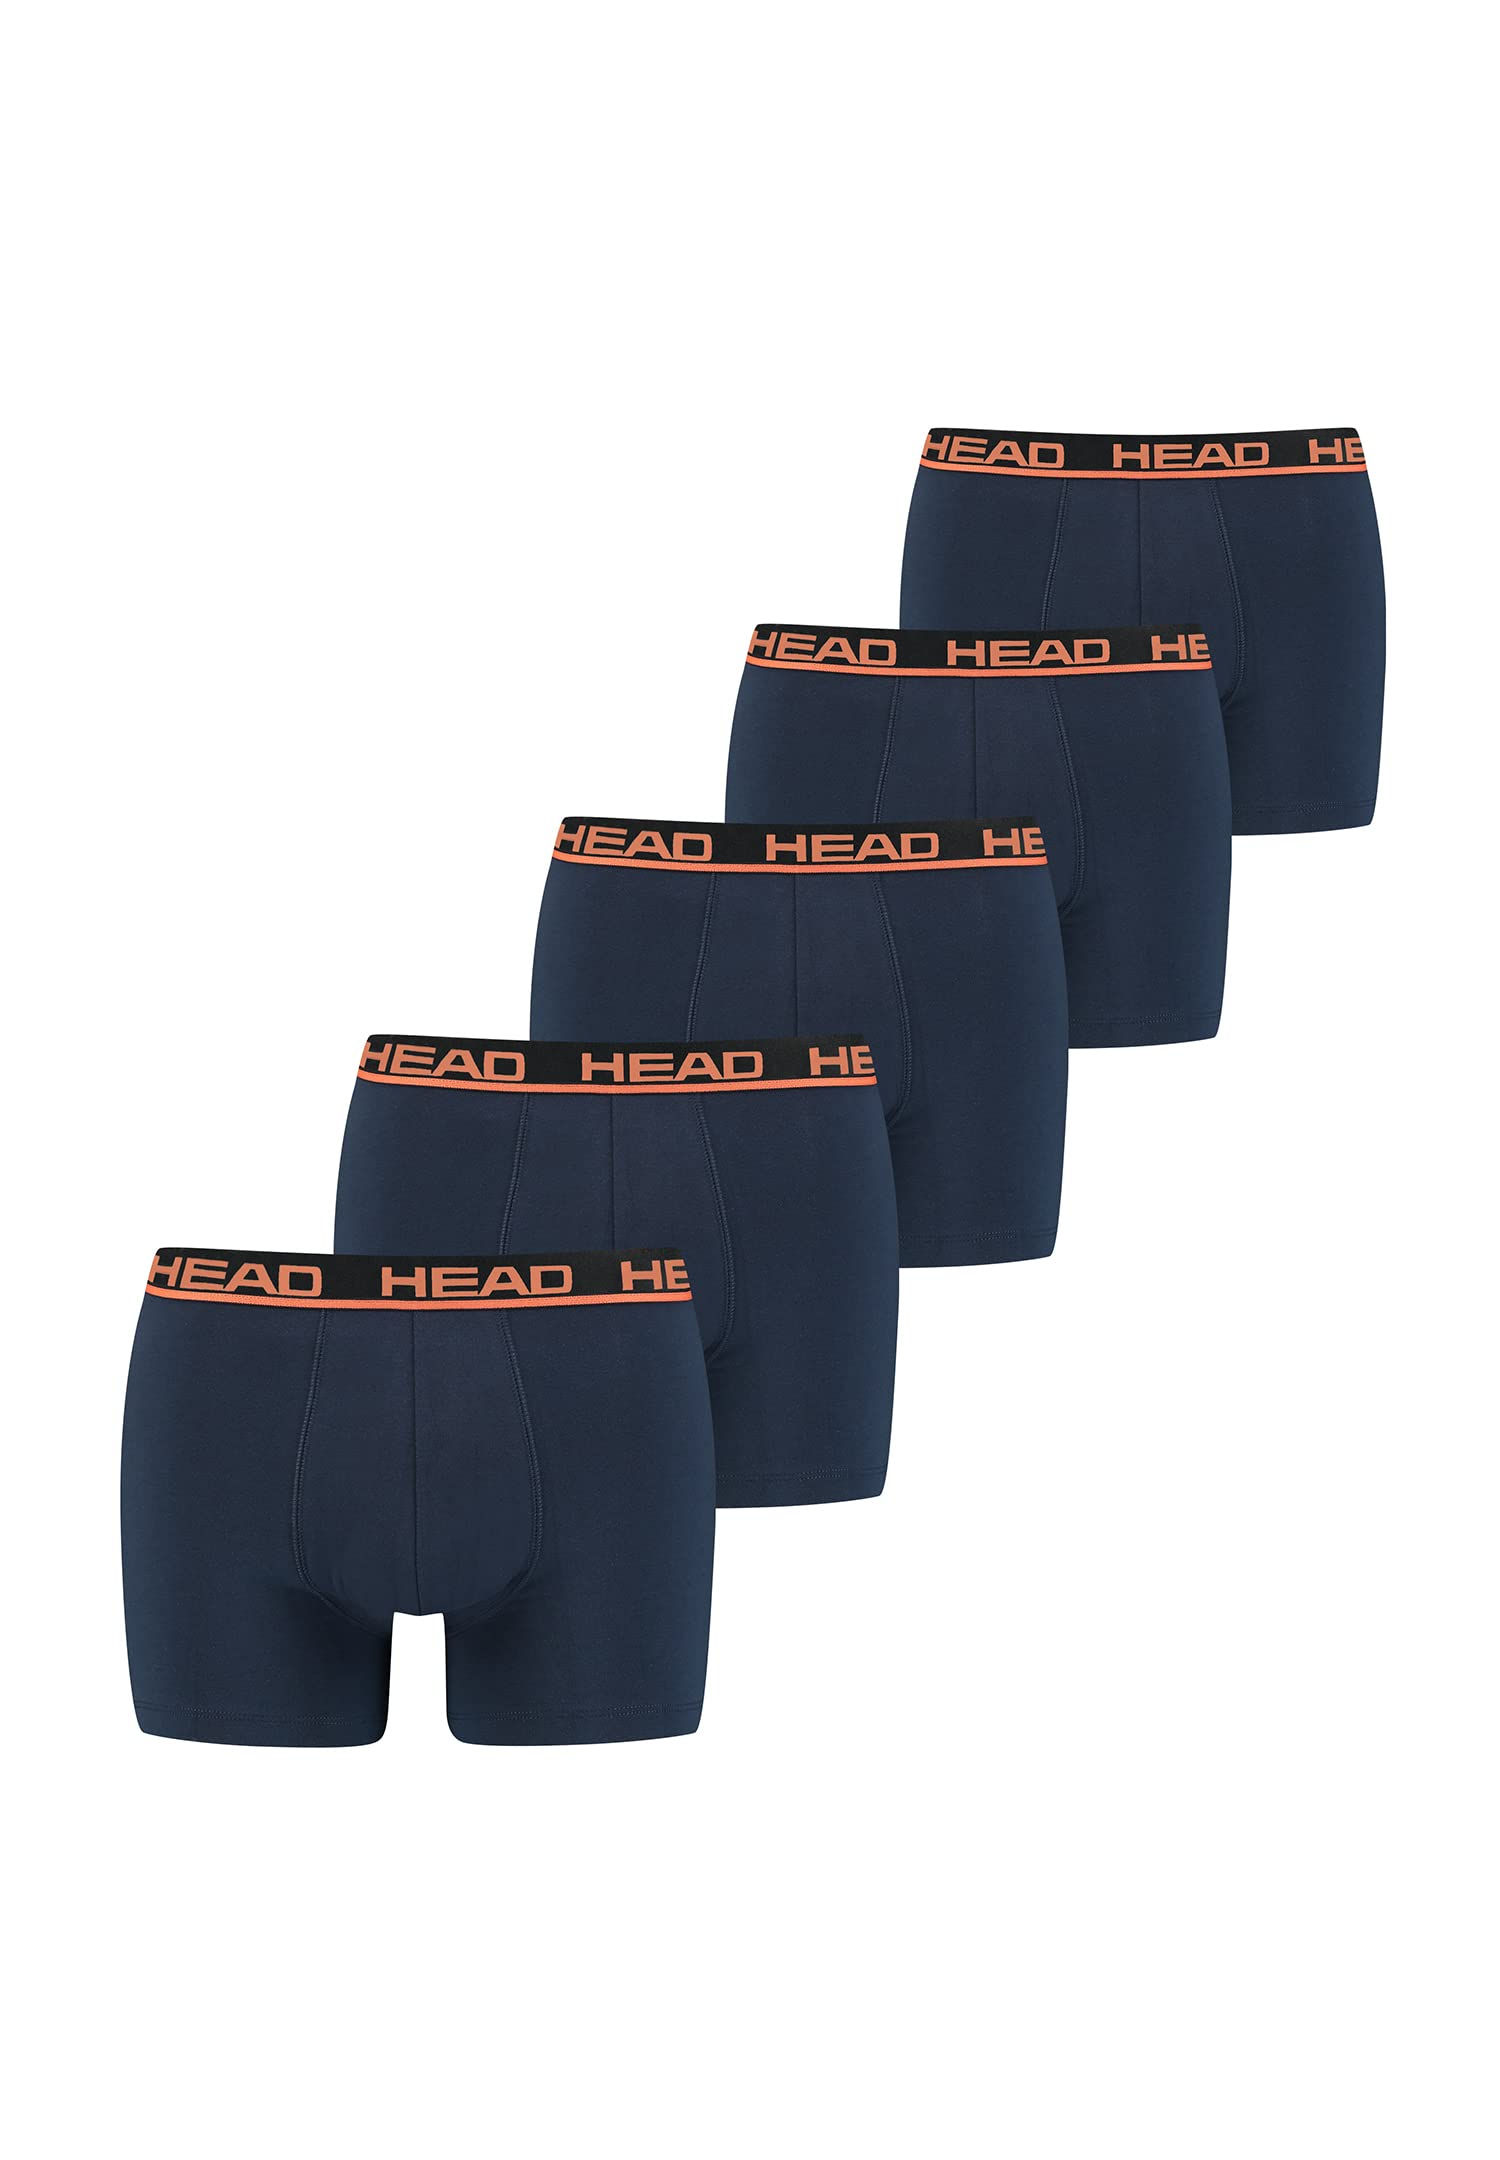 HEAD Herren Men's Basic Boxers Boxer Shorts 5 er Pack, Farbe:003 - Blue/Orange, Bekleidungsgröße:XXL